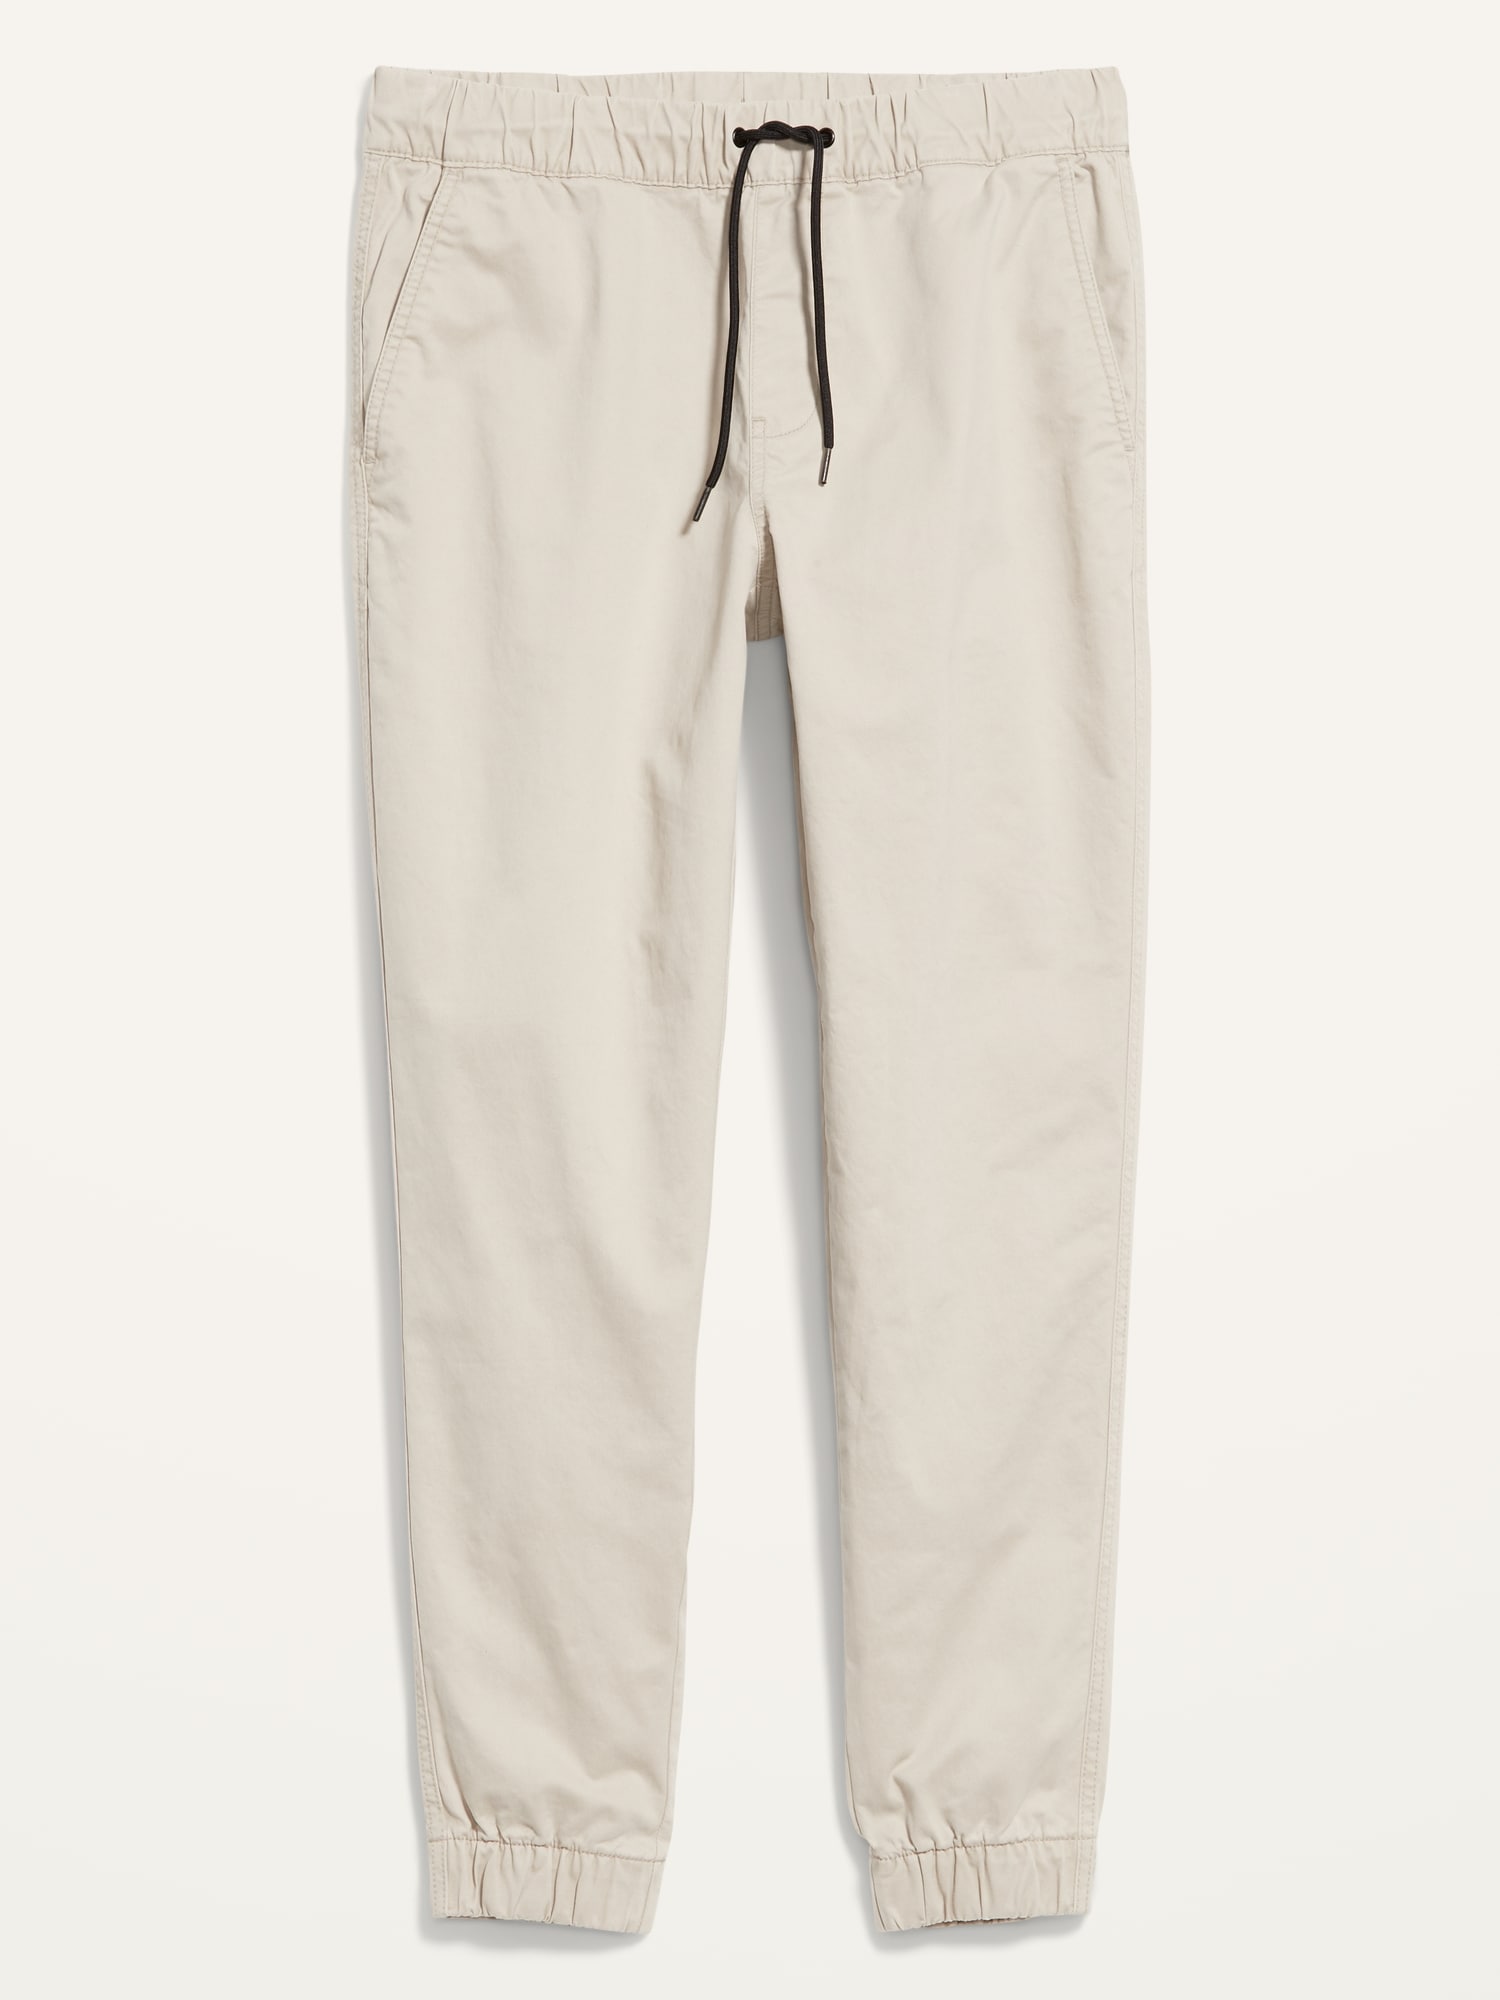 Slim BuiltIn Flex Rotation Chino Pants for Men  Old Navy